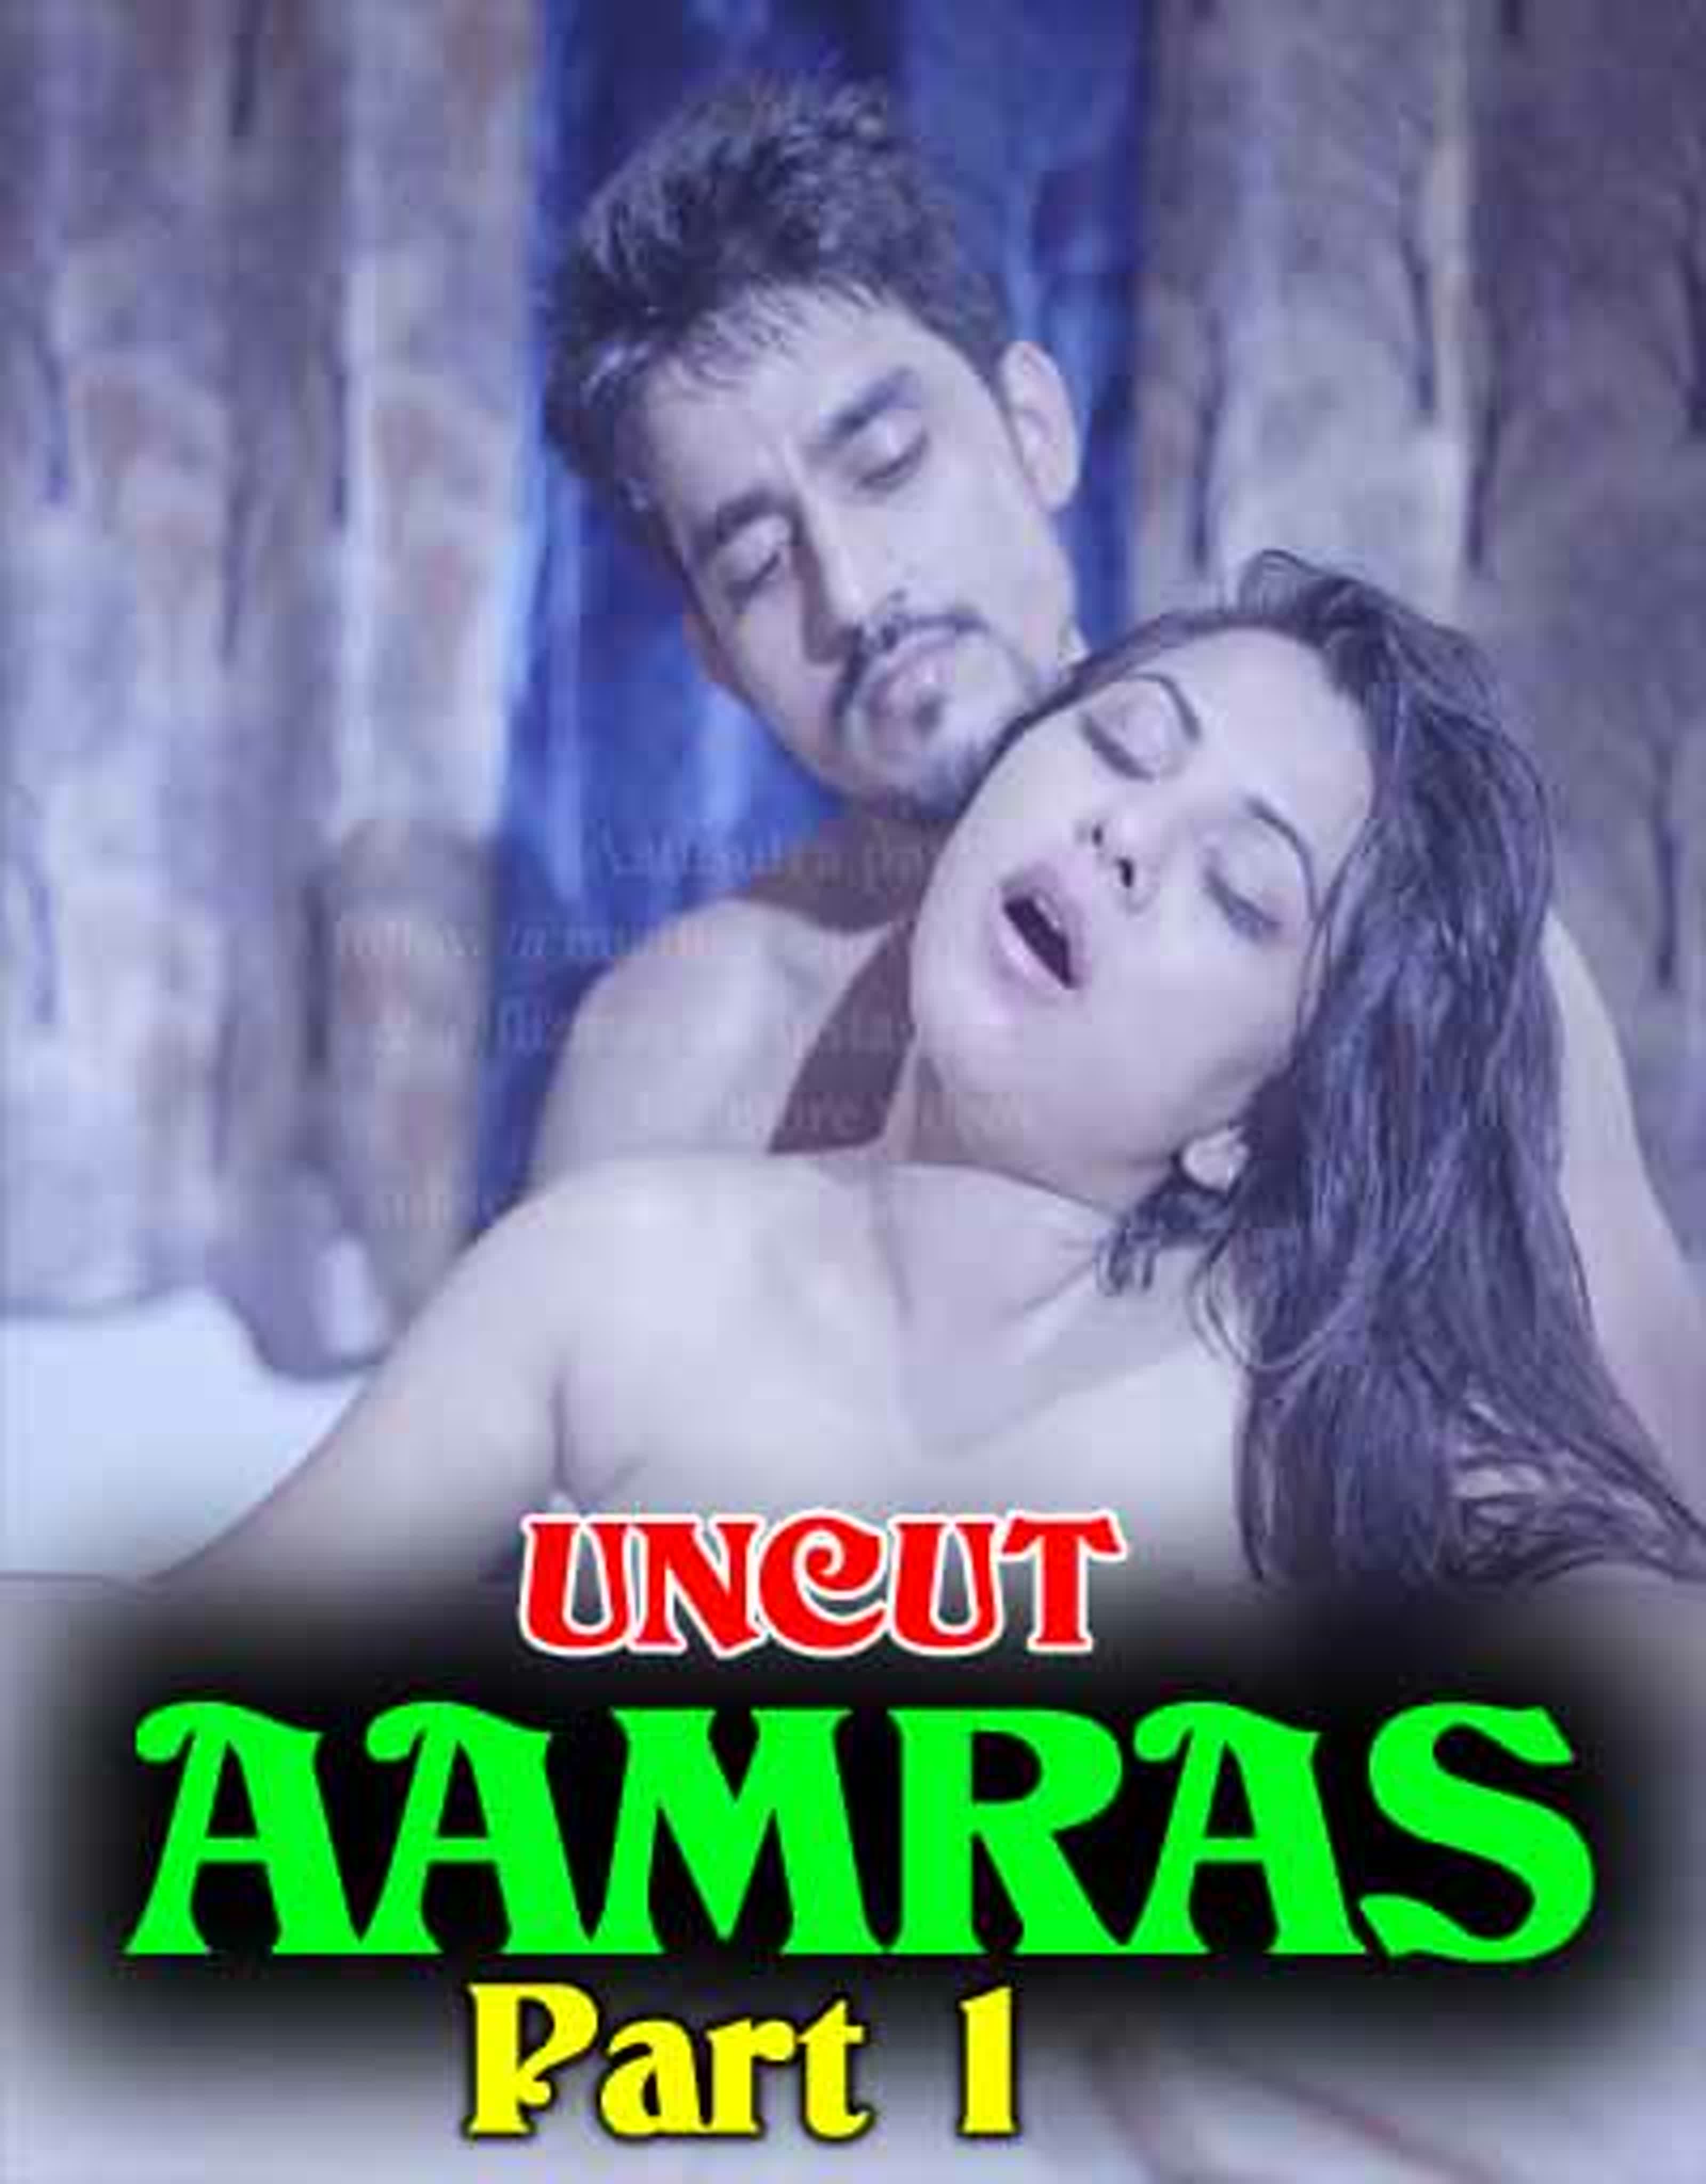 Aamras uncut = all episodes